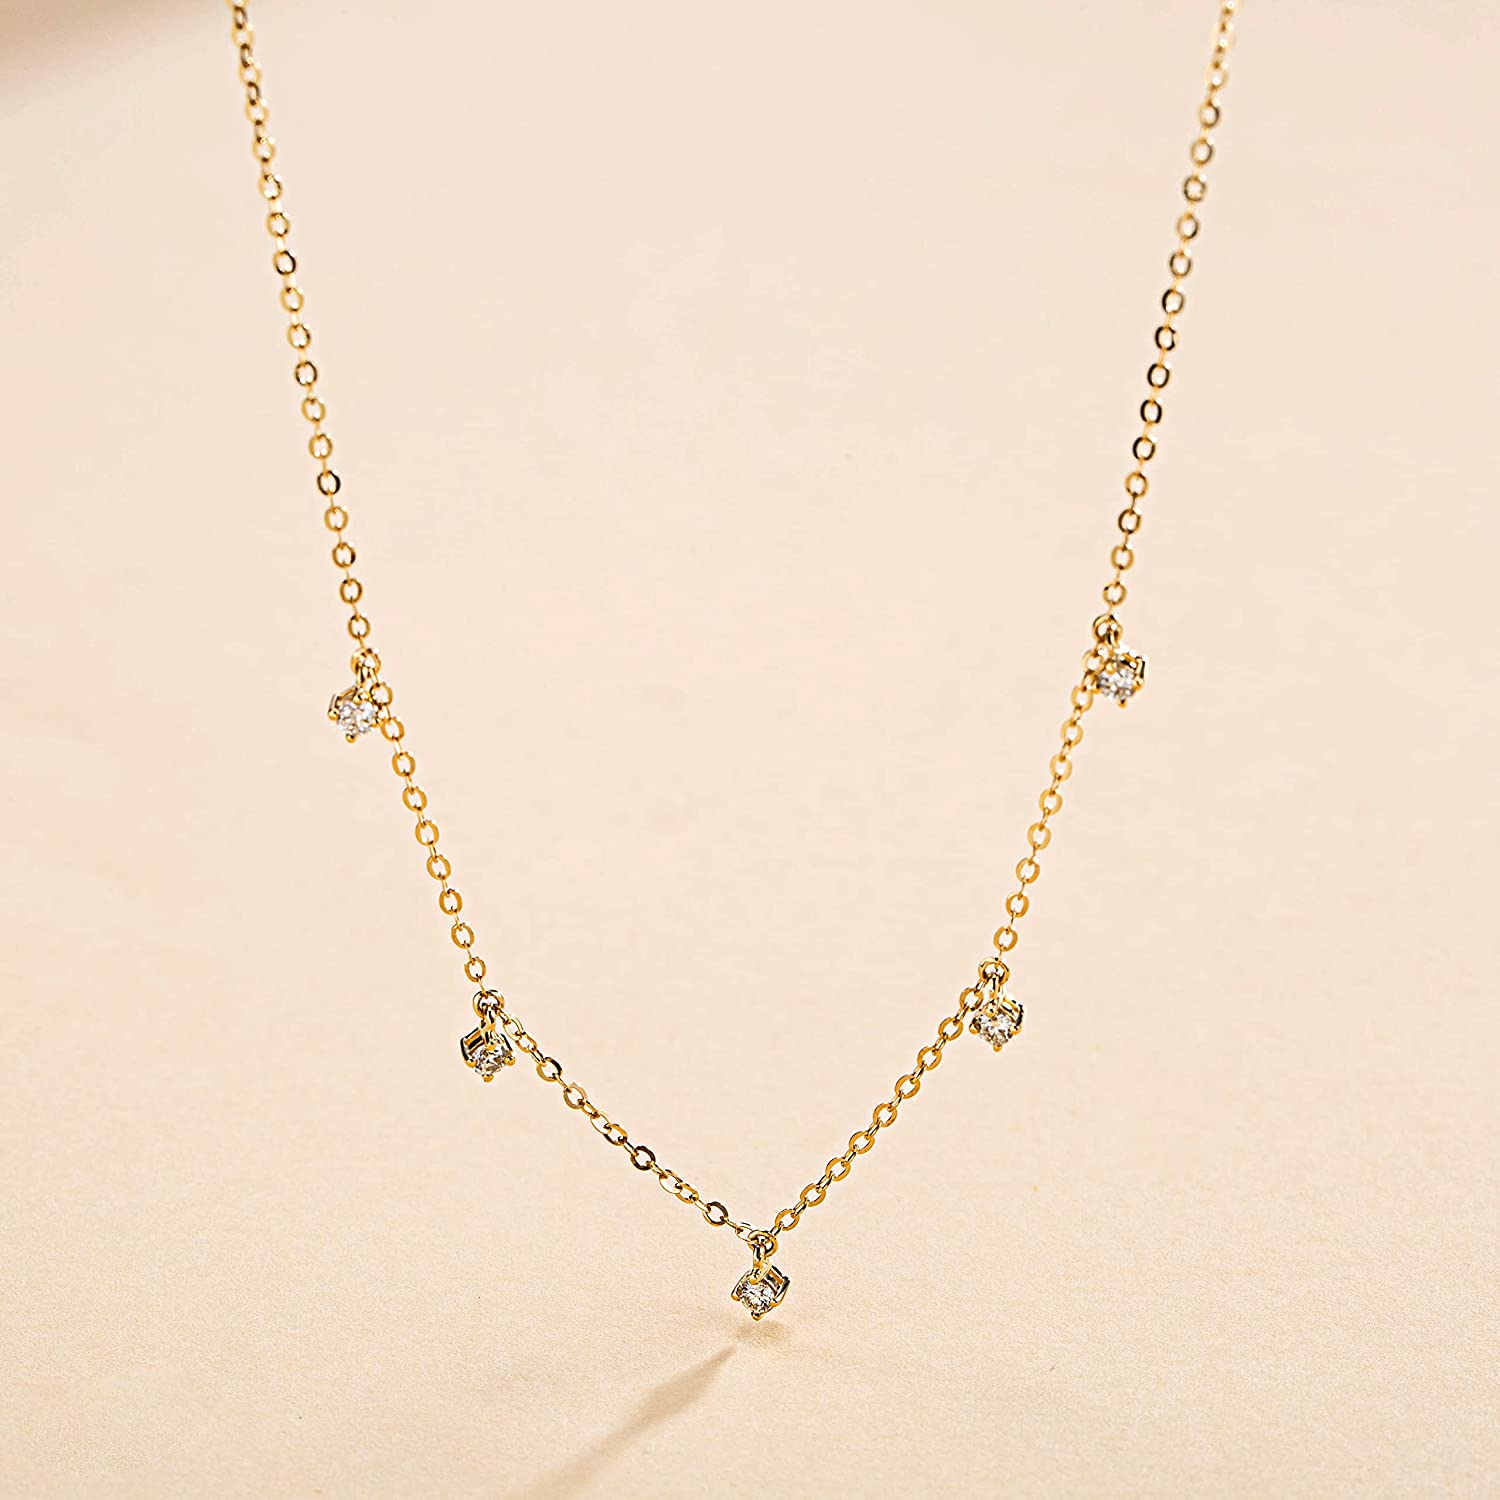 Fanci “5 Stone” Minimalist Chain 14K Solid Gold Necklace Main